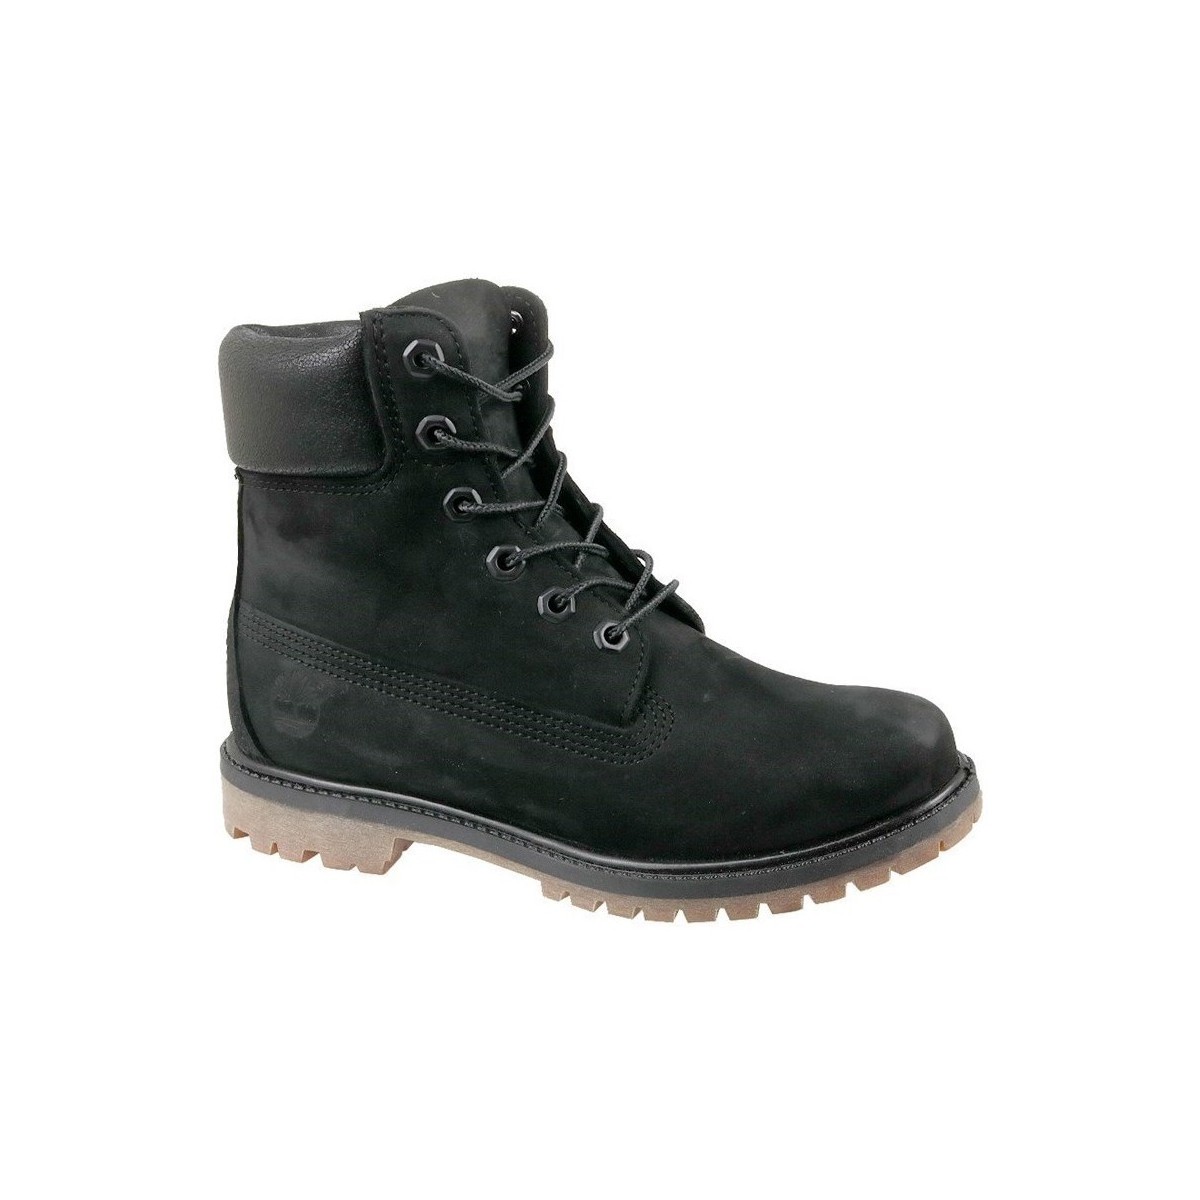 Cipők Női Magas szárú edzőcipők Timberland 6 IN Premium Boot W Fekete 